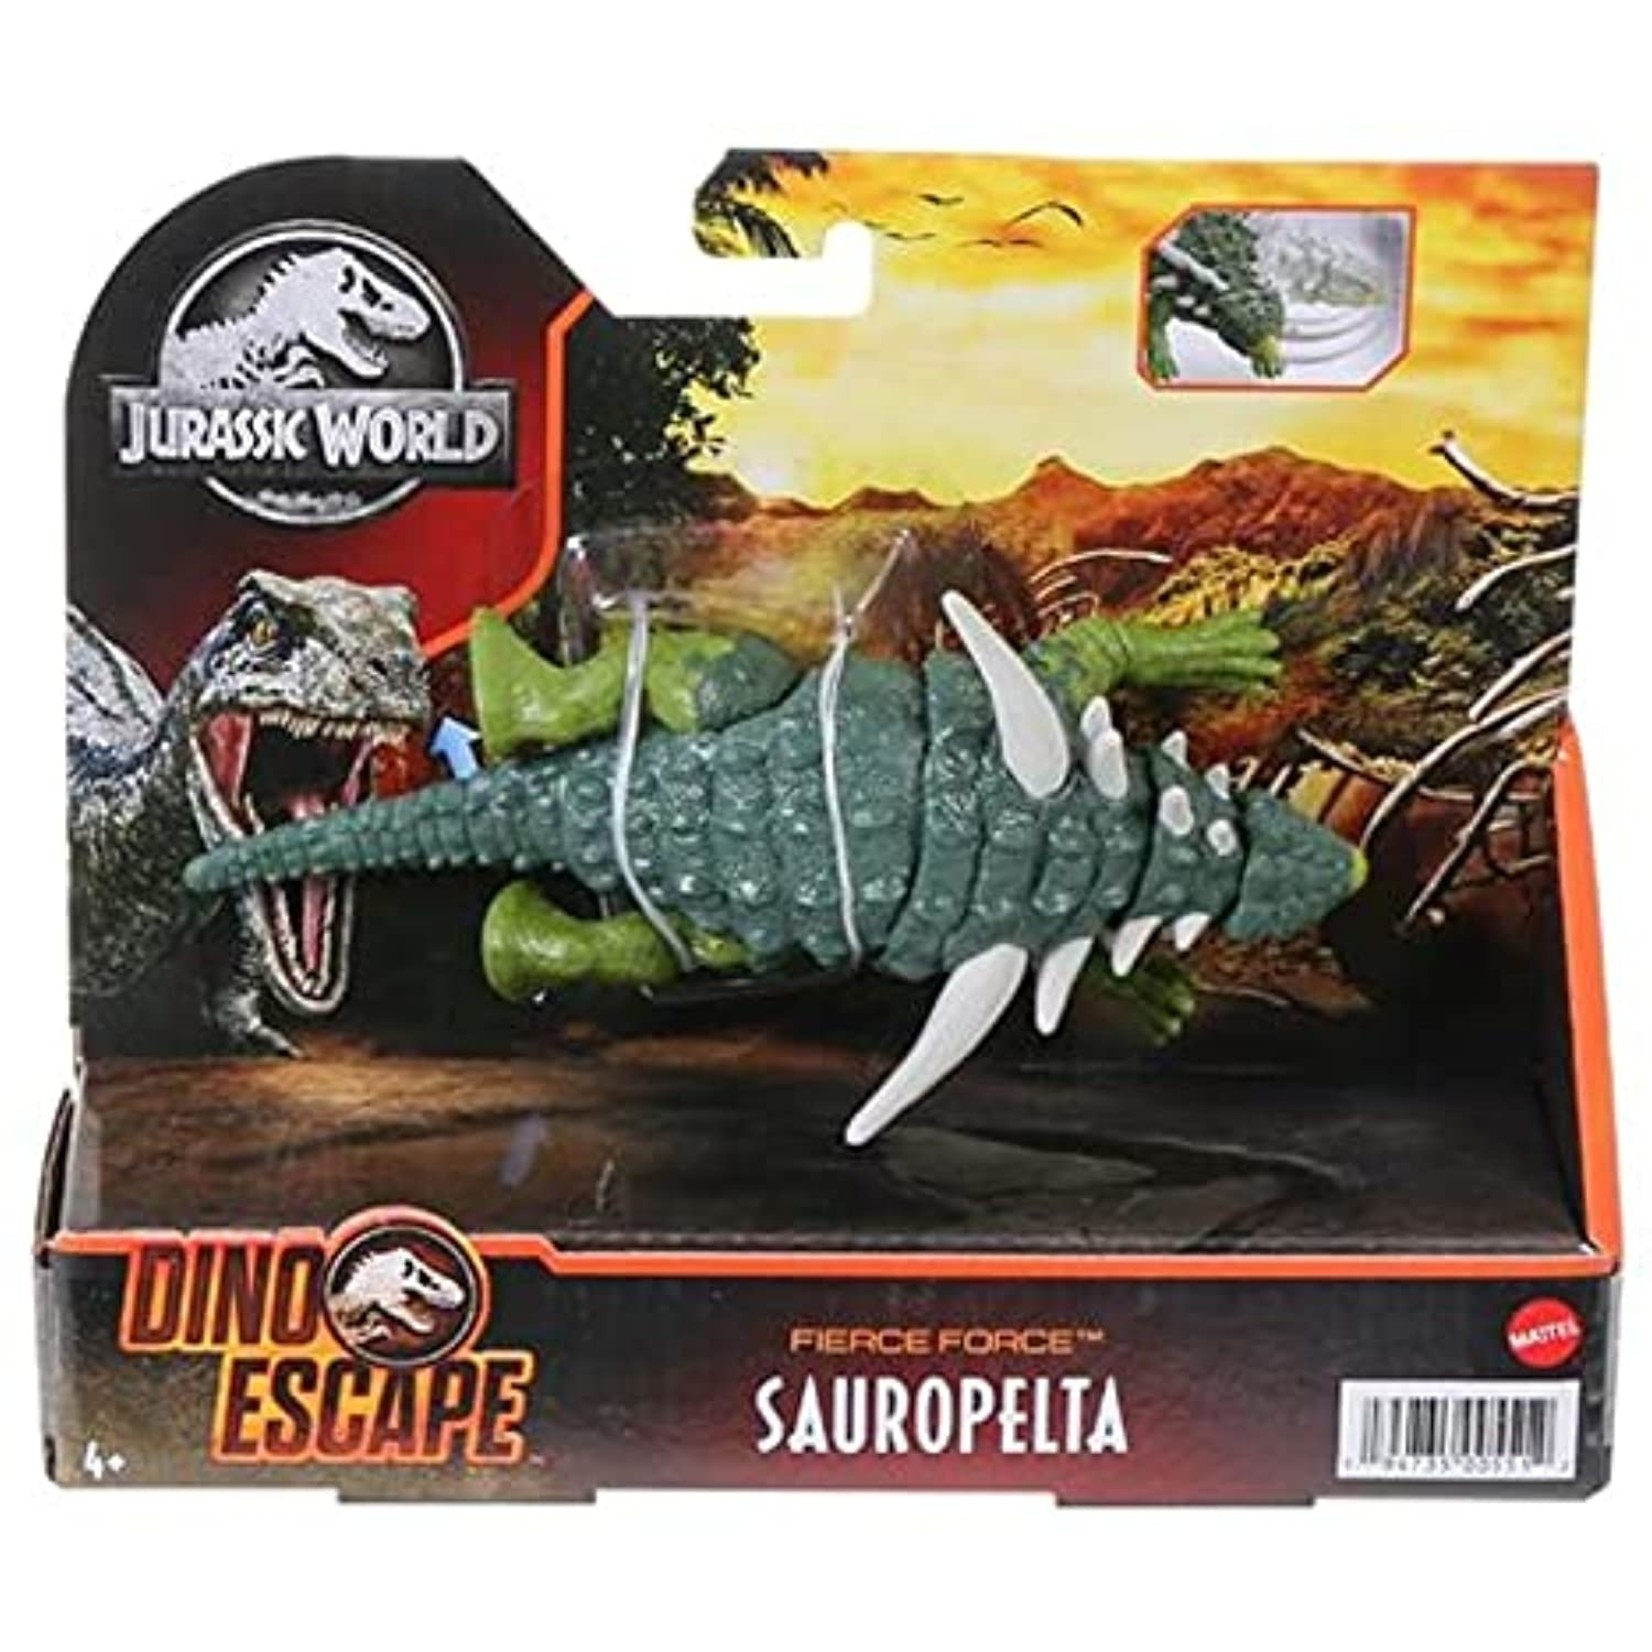 Jurassic World Fierce Force Sauropelta Dinosaur Action Figure